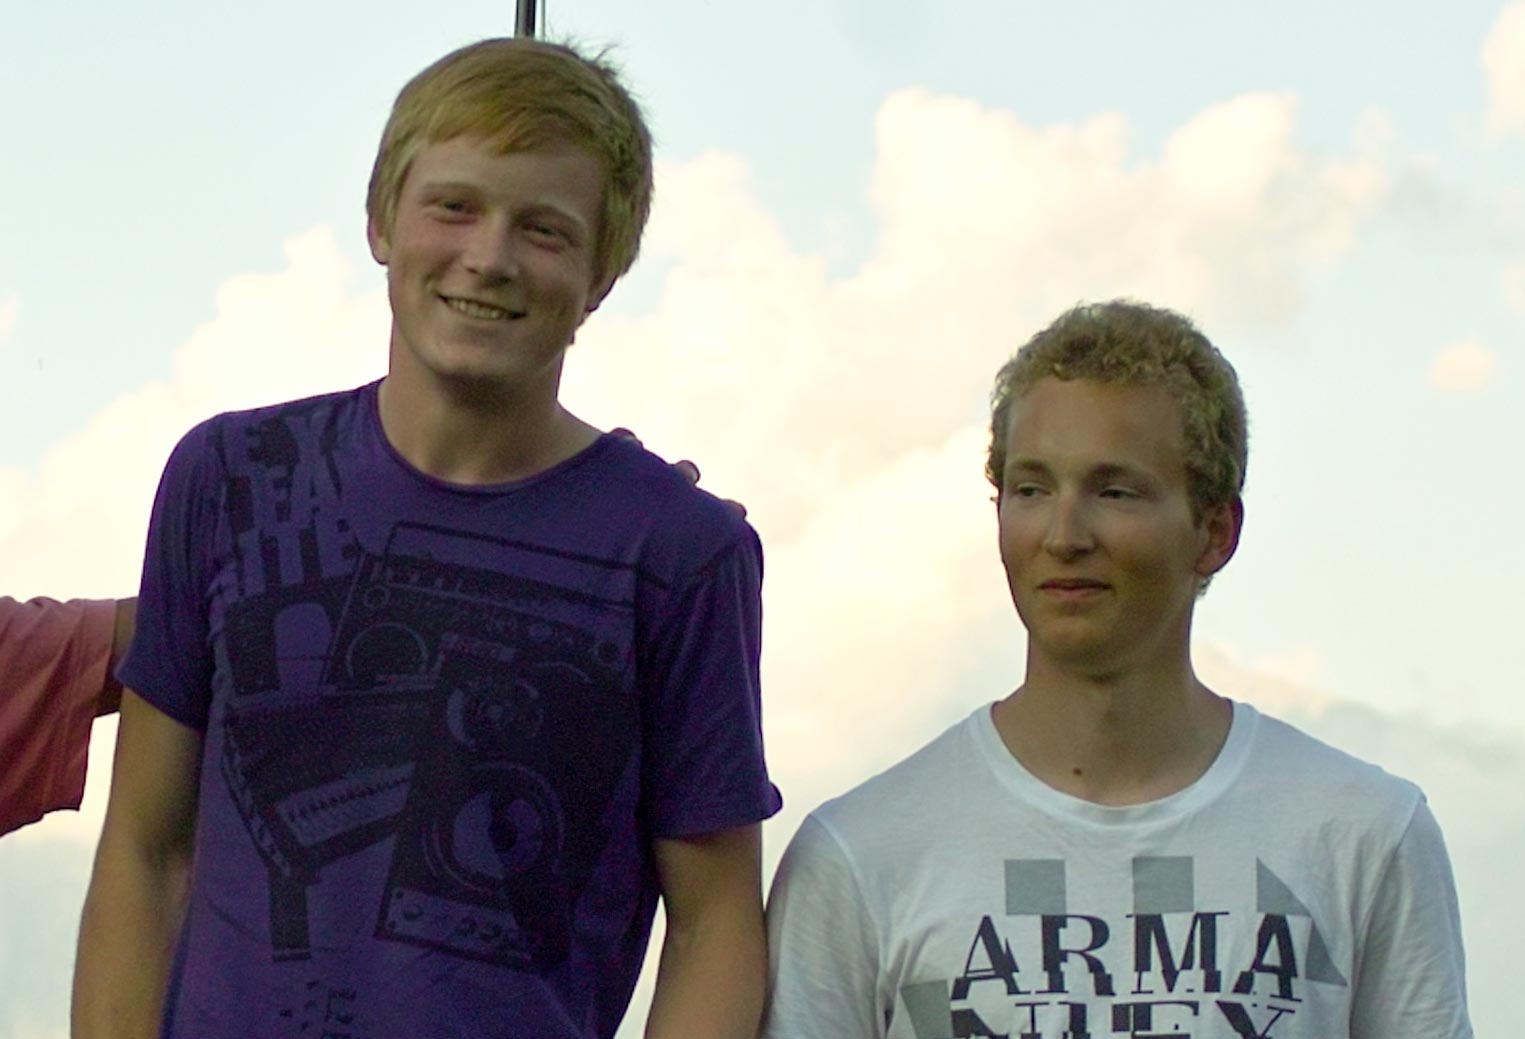 Vindere i Europeklassen, Mathias Livbjerg og Jacob Cholewa. Foto: europeclass.dk